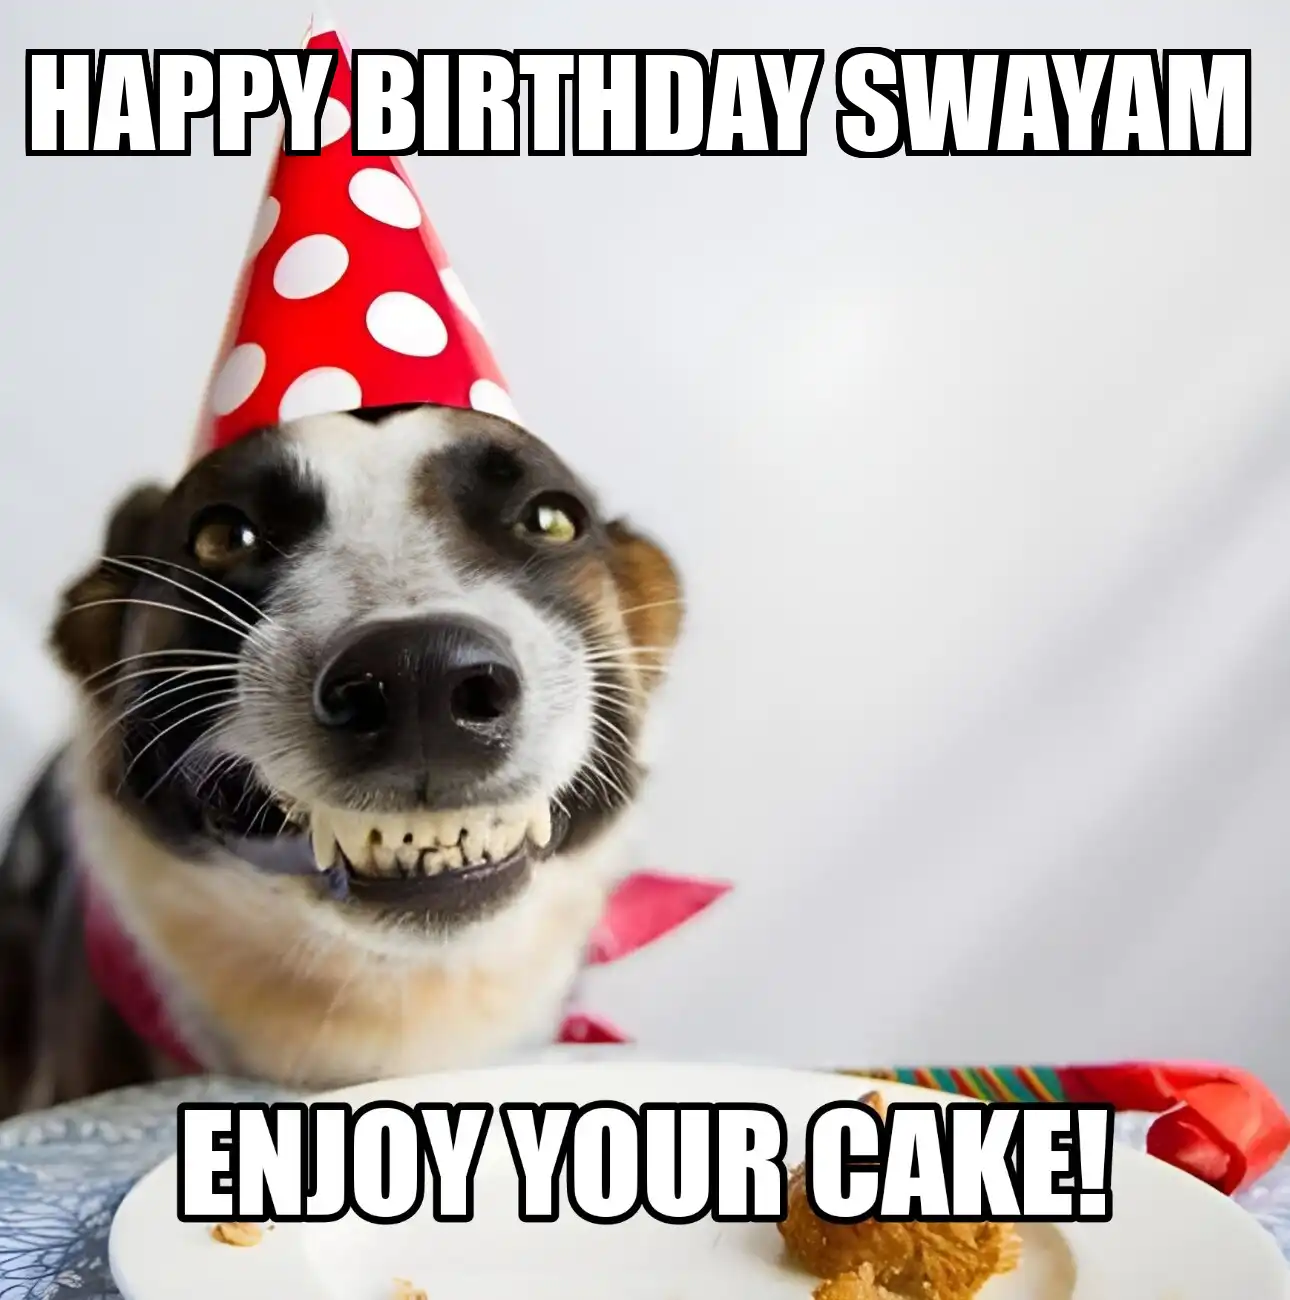 Happy Birthday Swayam Enjoy Your Cake Dog Meme